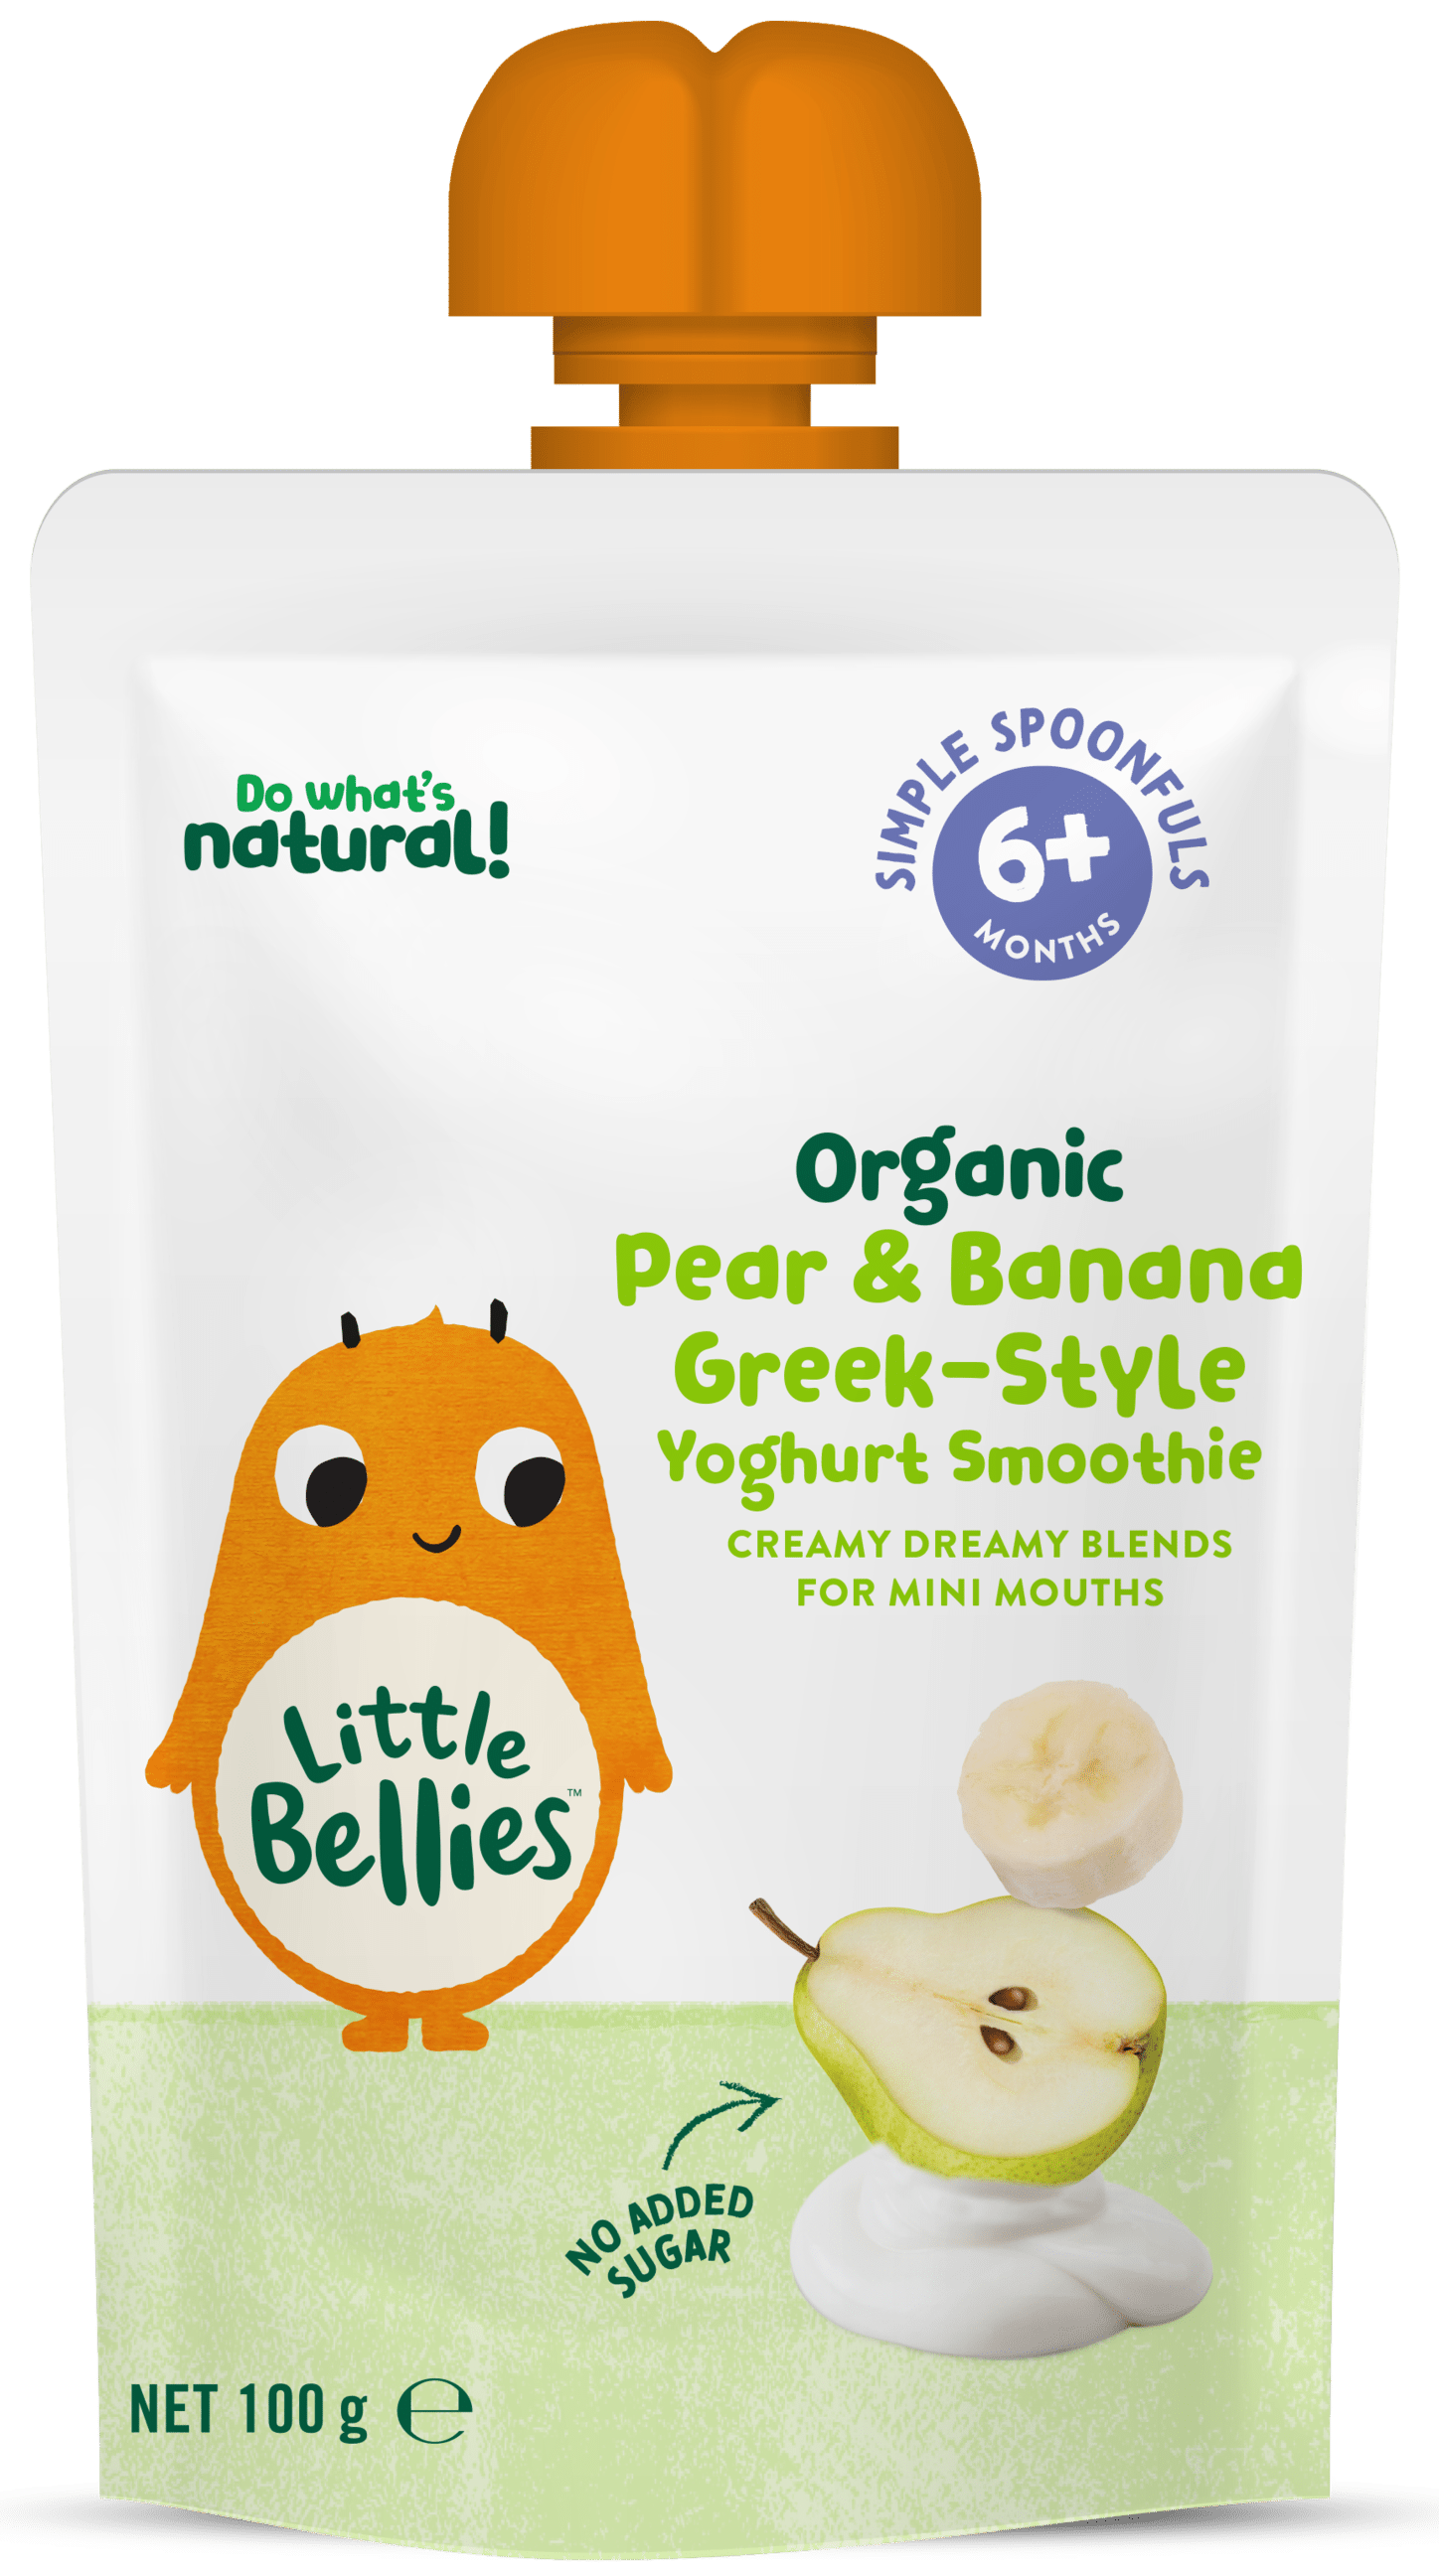 Organic Pear & Banana Greek-Style Yoghurt Smoothie